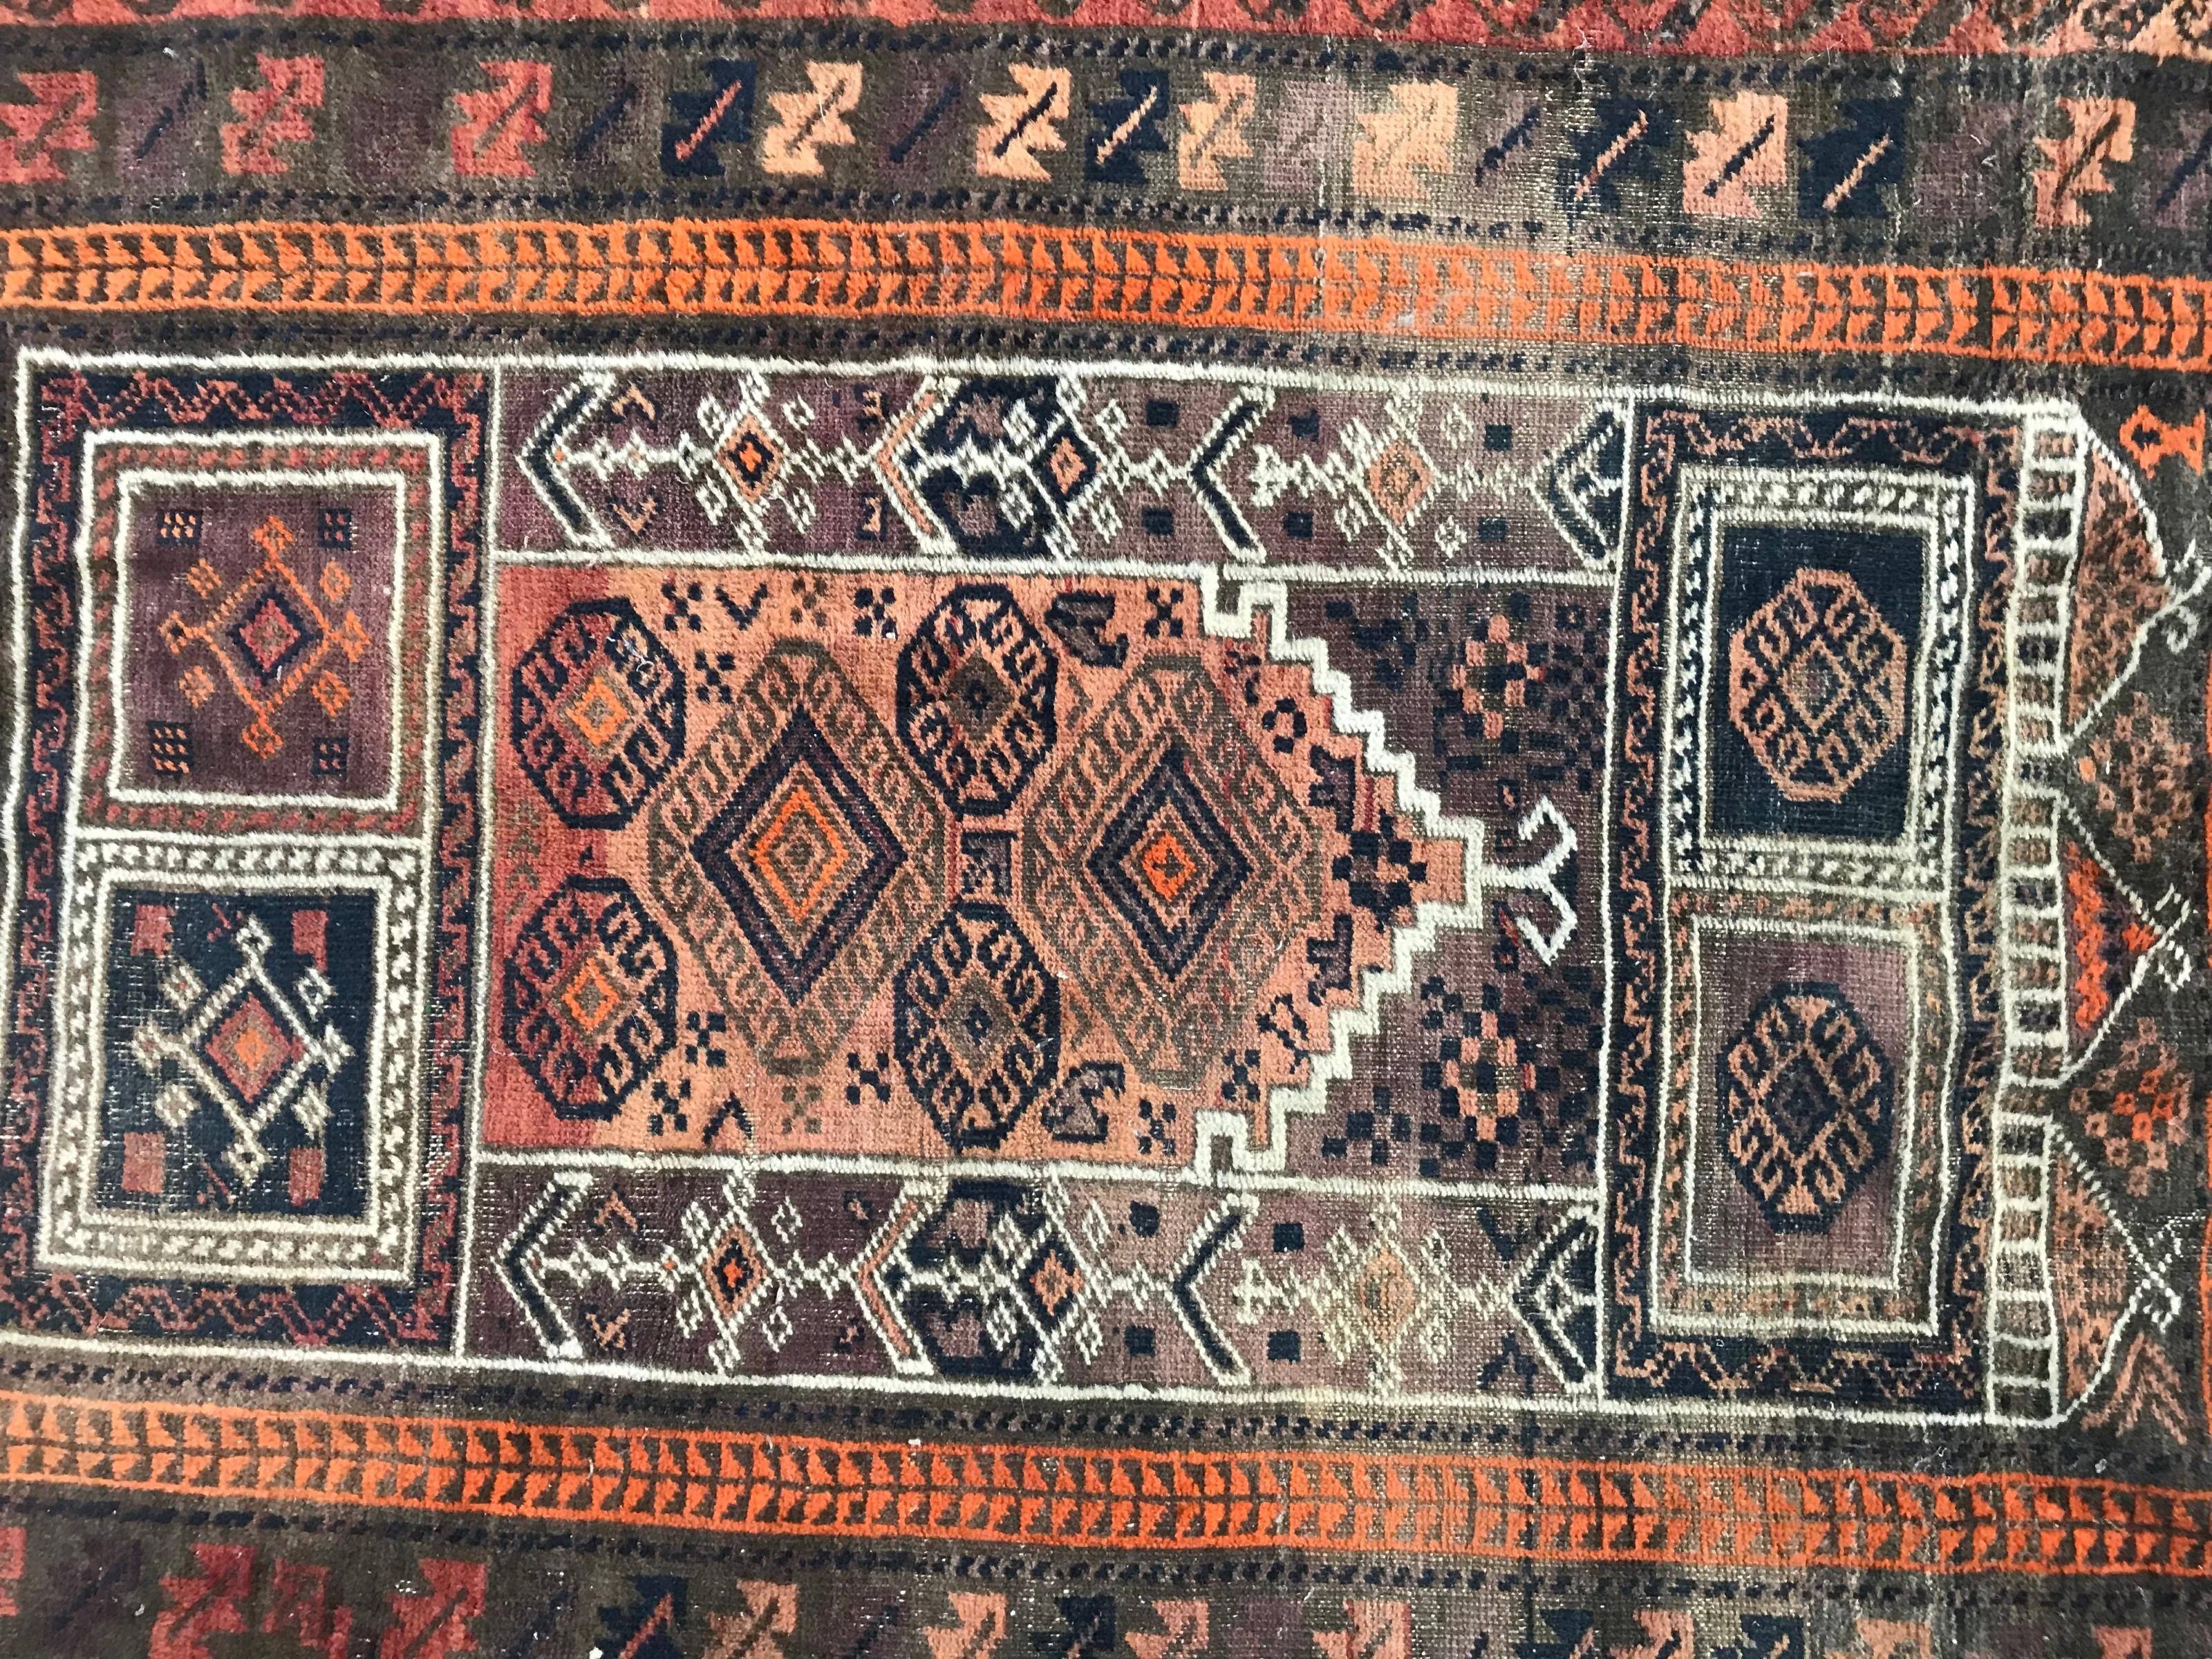 20th century Belutch Afghan rug with a tribal design
Wool velvet on wool foundation.